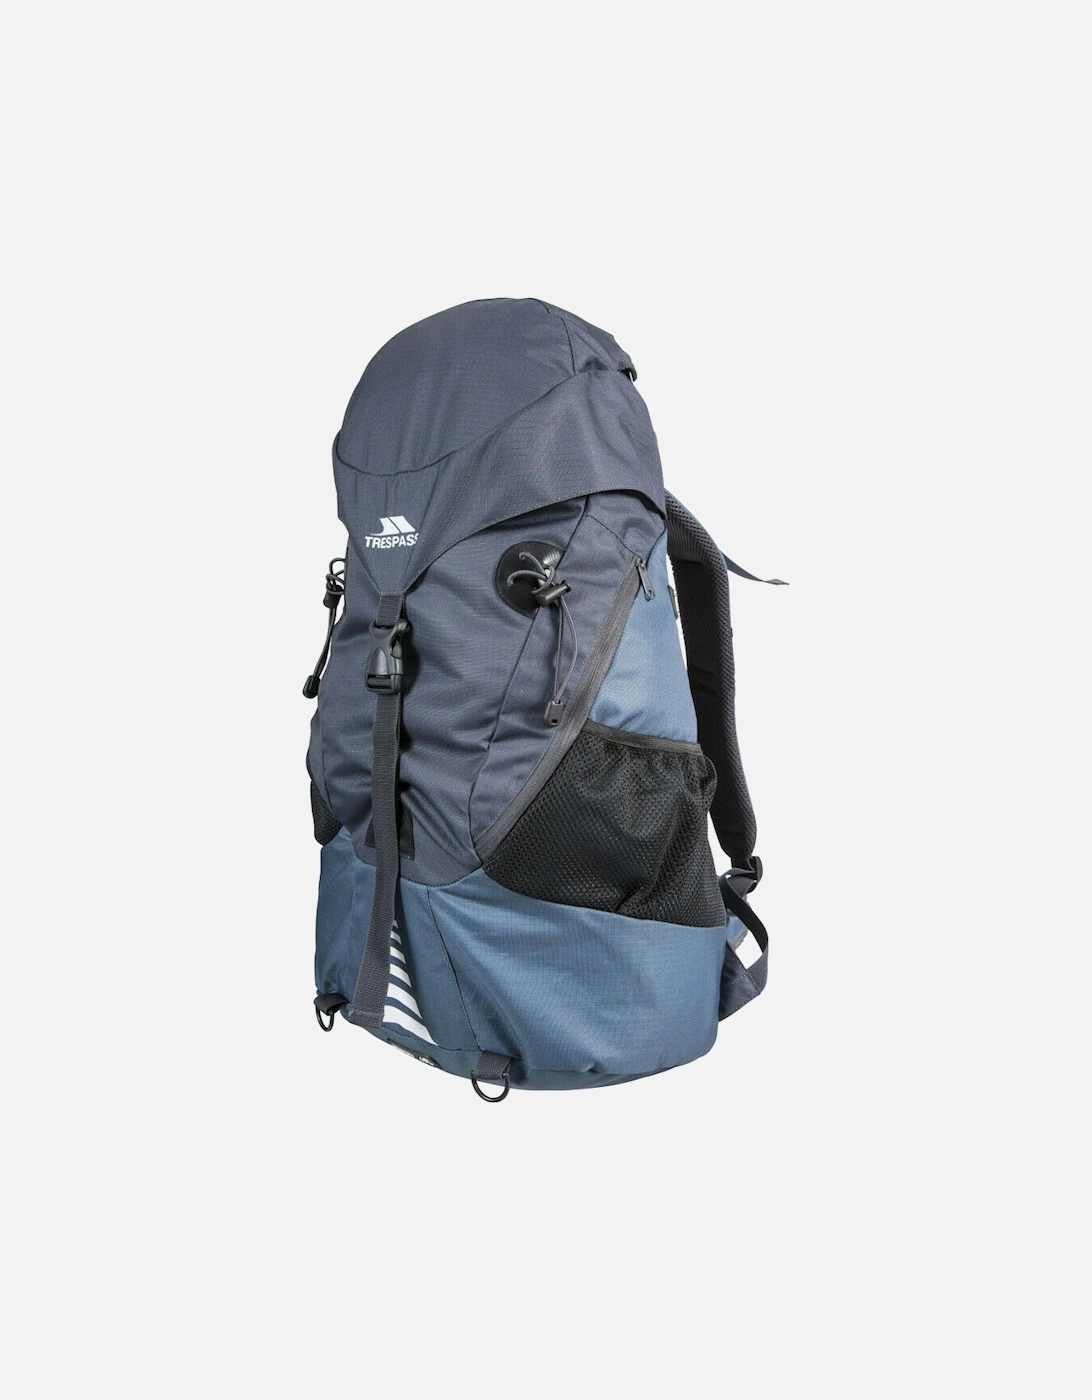 Inverary Rucksack/Backpack (45 Litres)